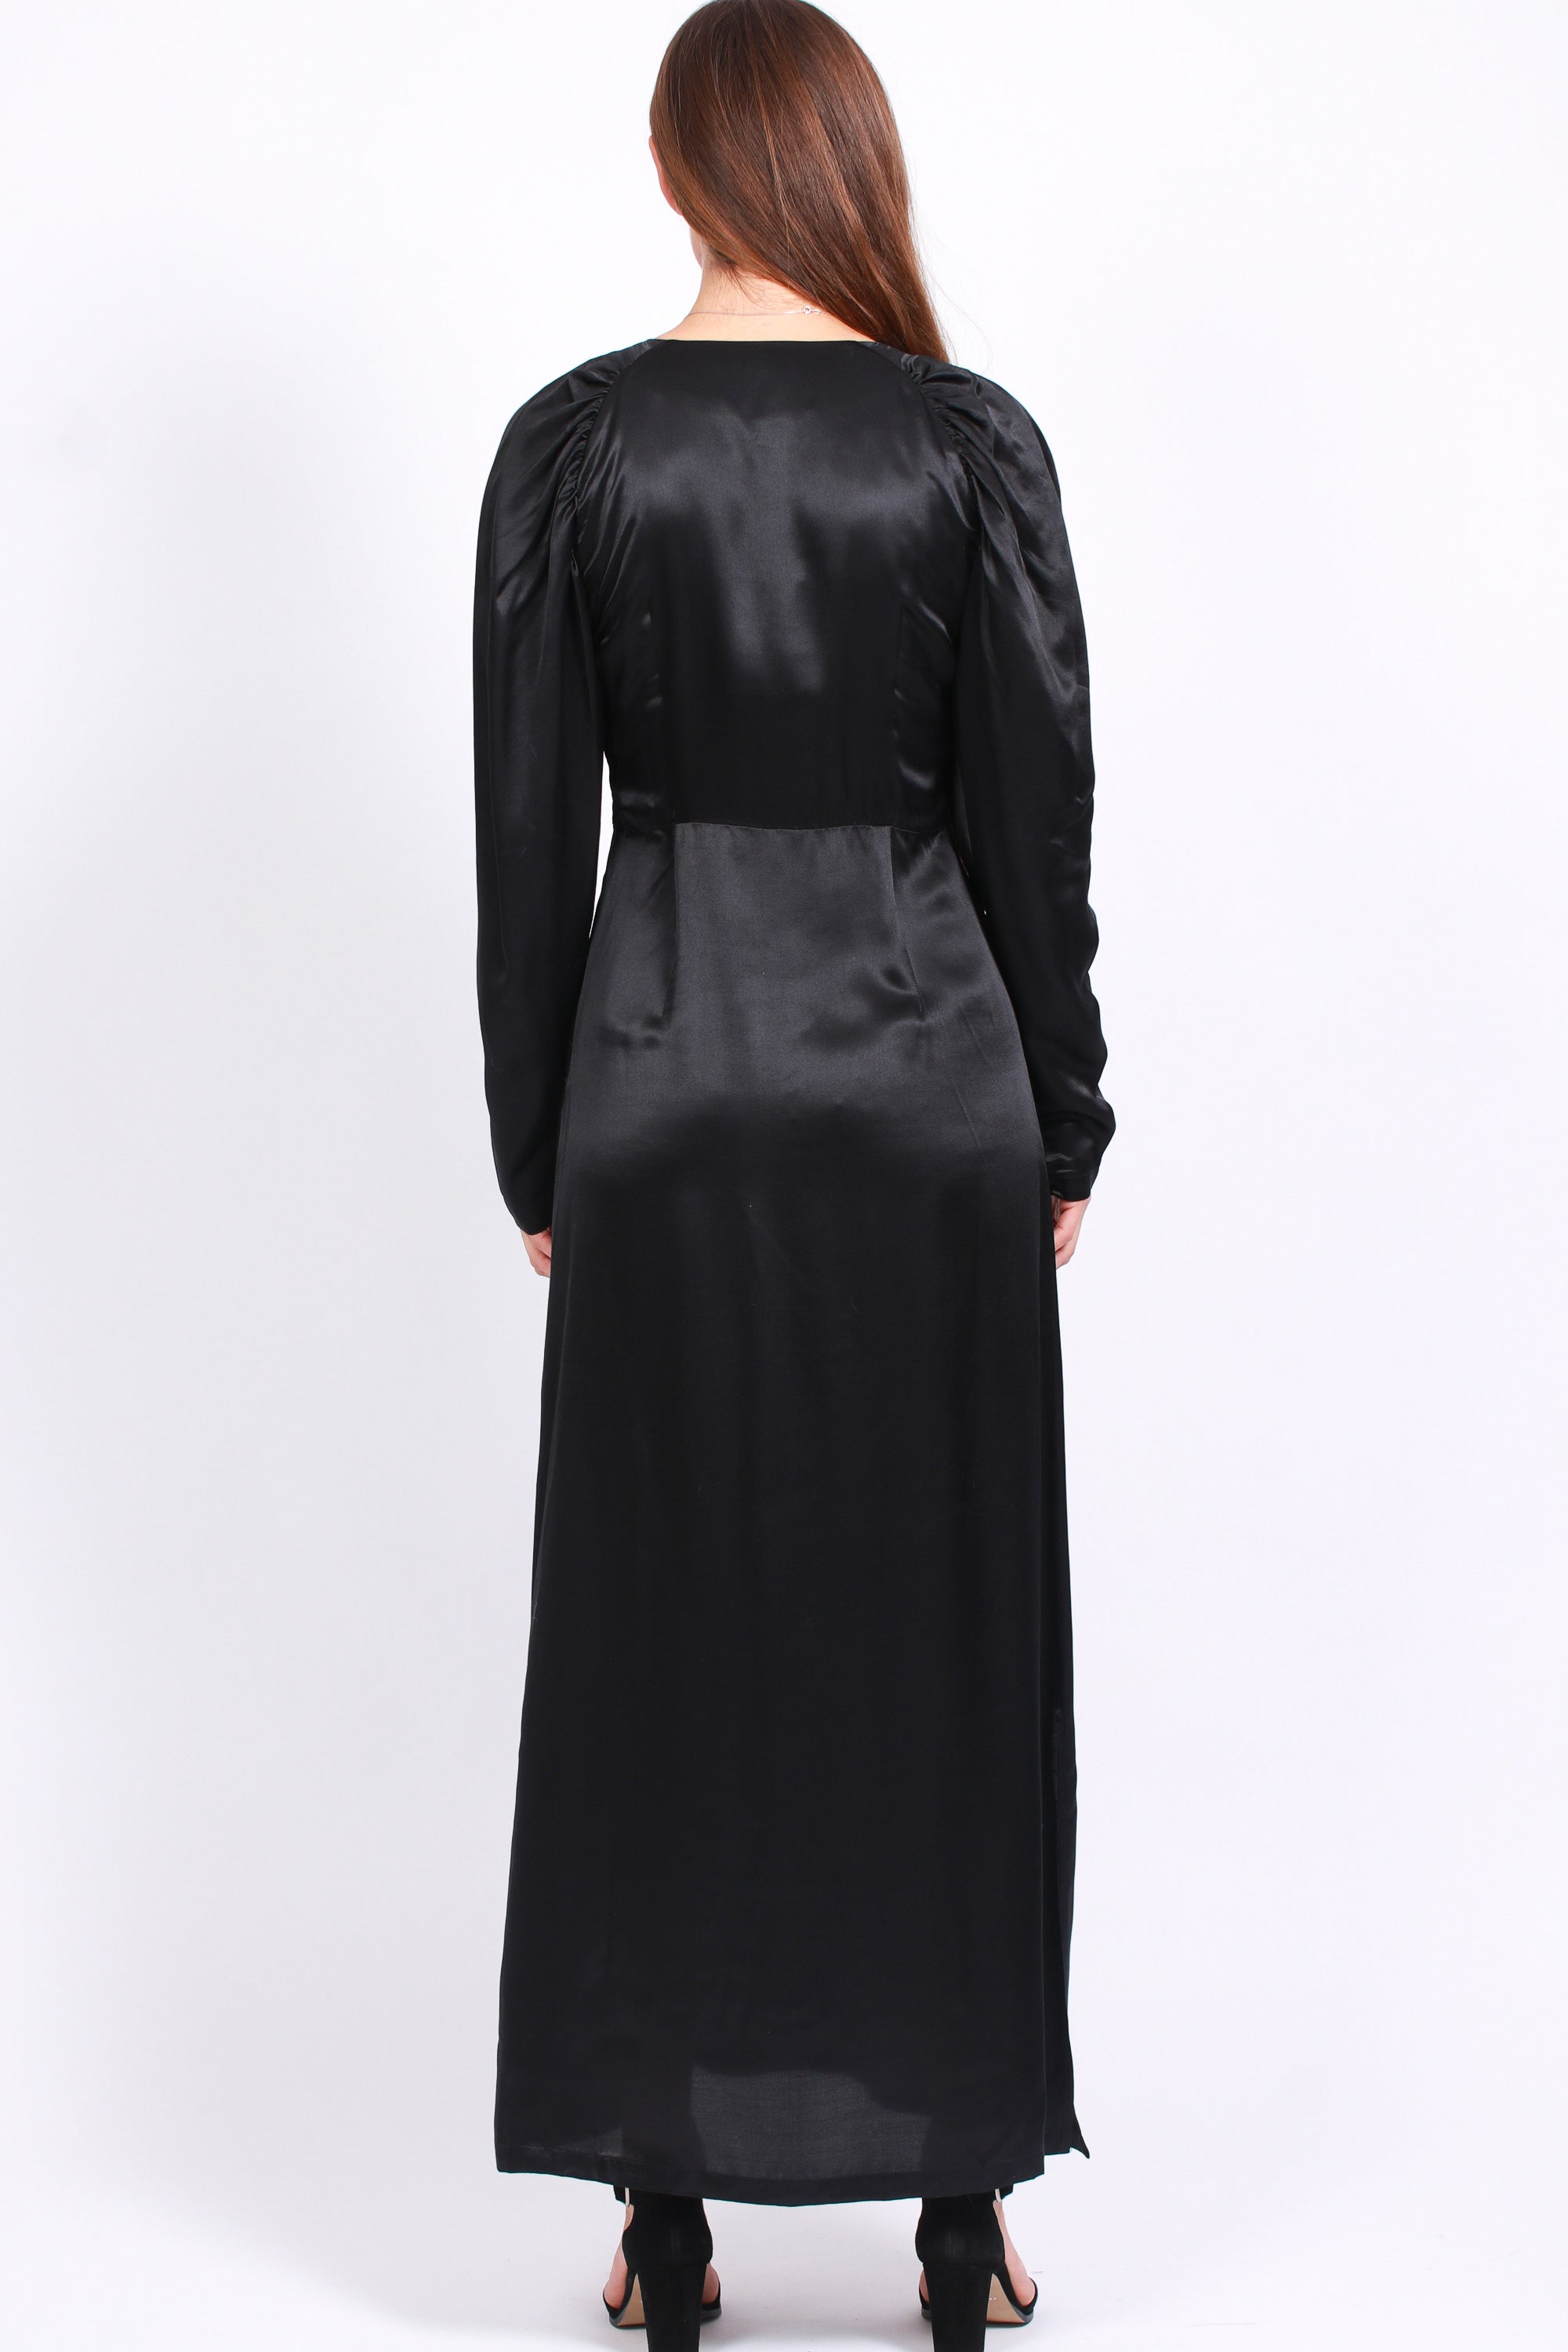 Peaches Long Solid Dress - Black - Line of Oslo - Kjoler - VILLOID.no